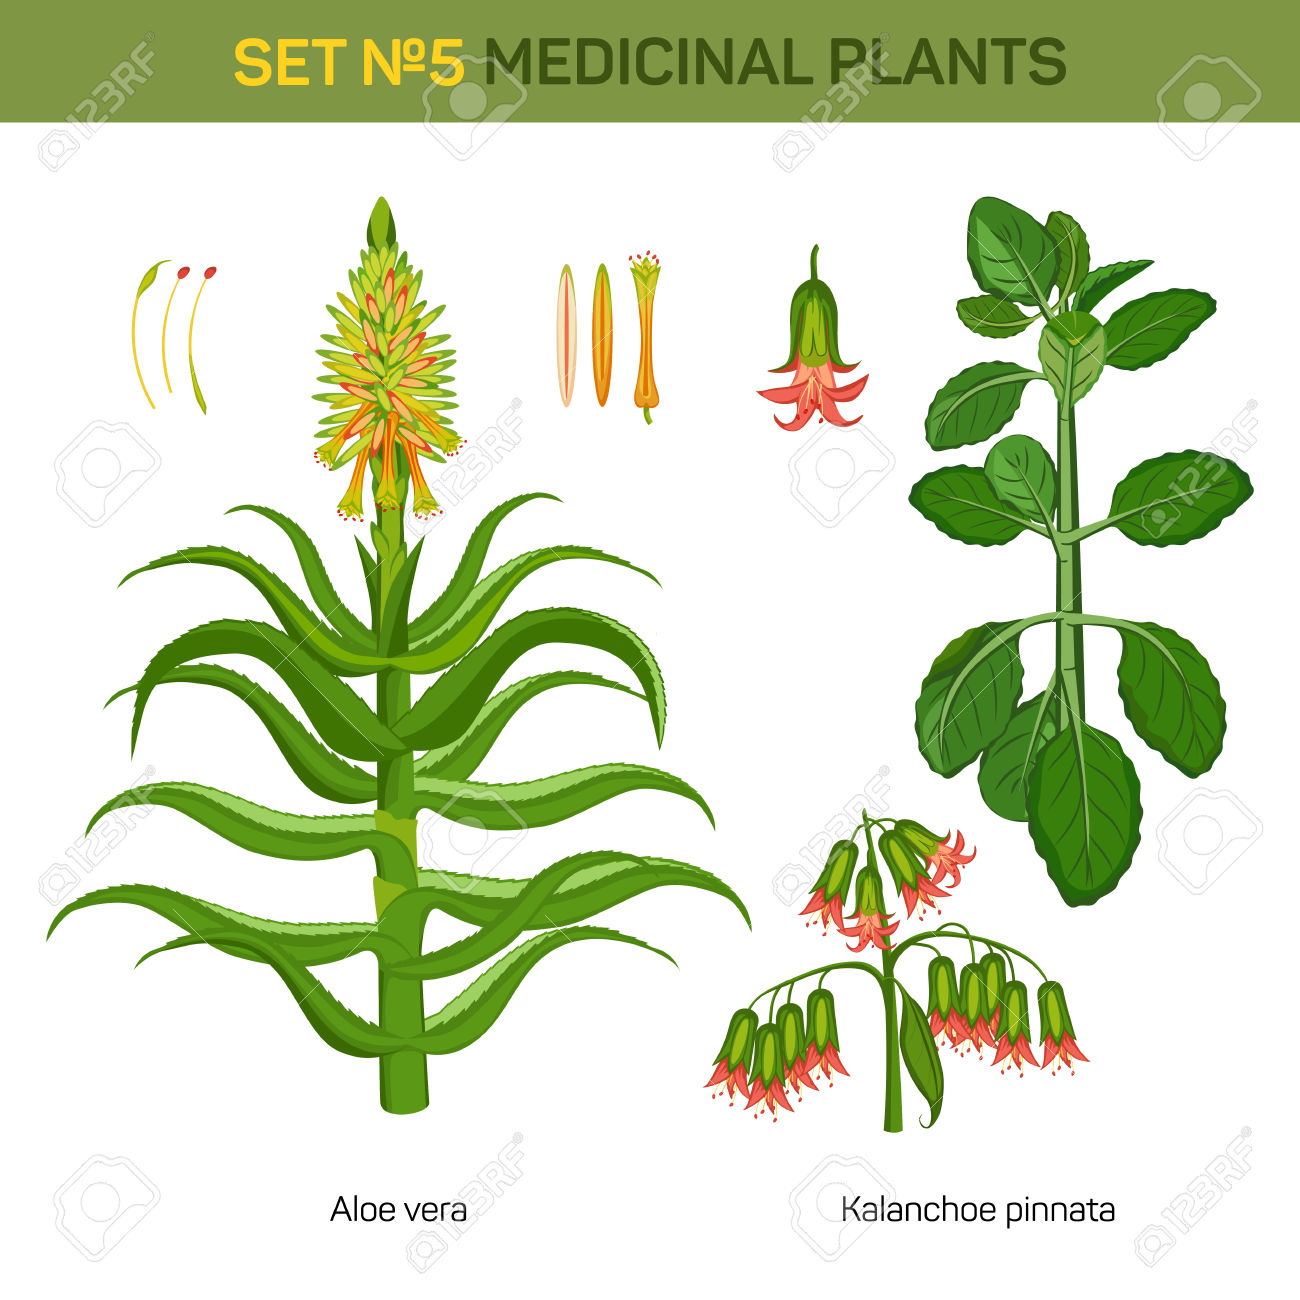 Aloe Vera And Kalanchoe Pinnata Medical Plants. Bryophyllum.